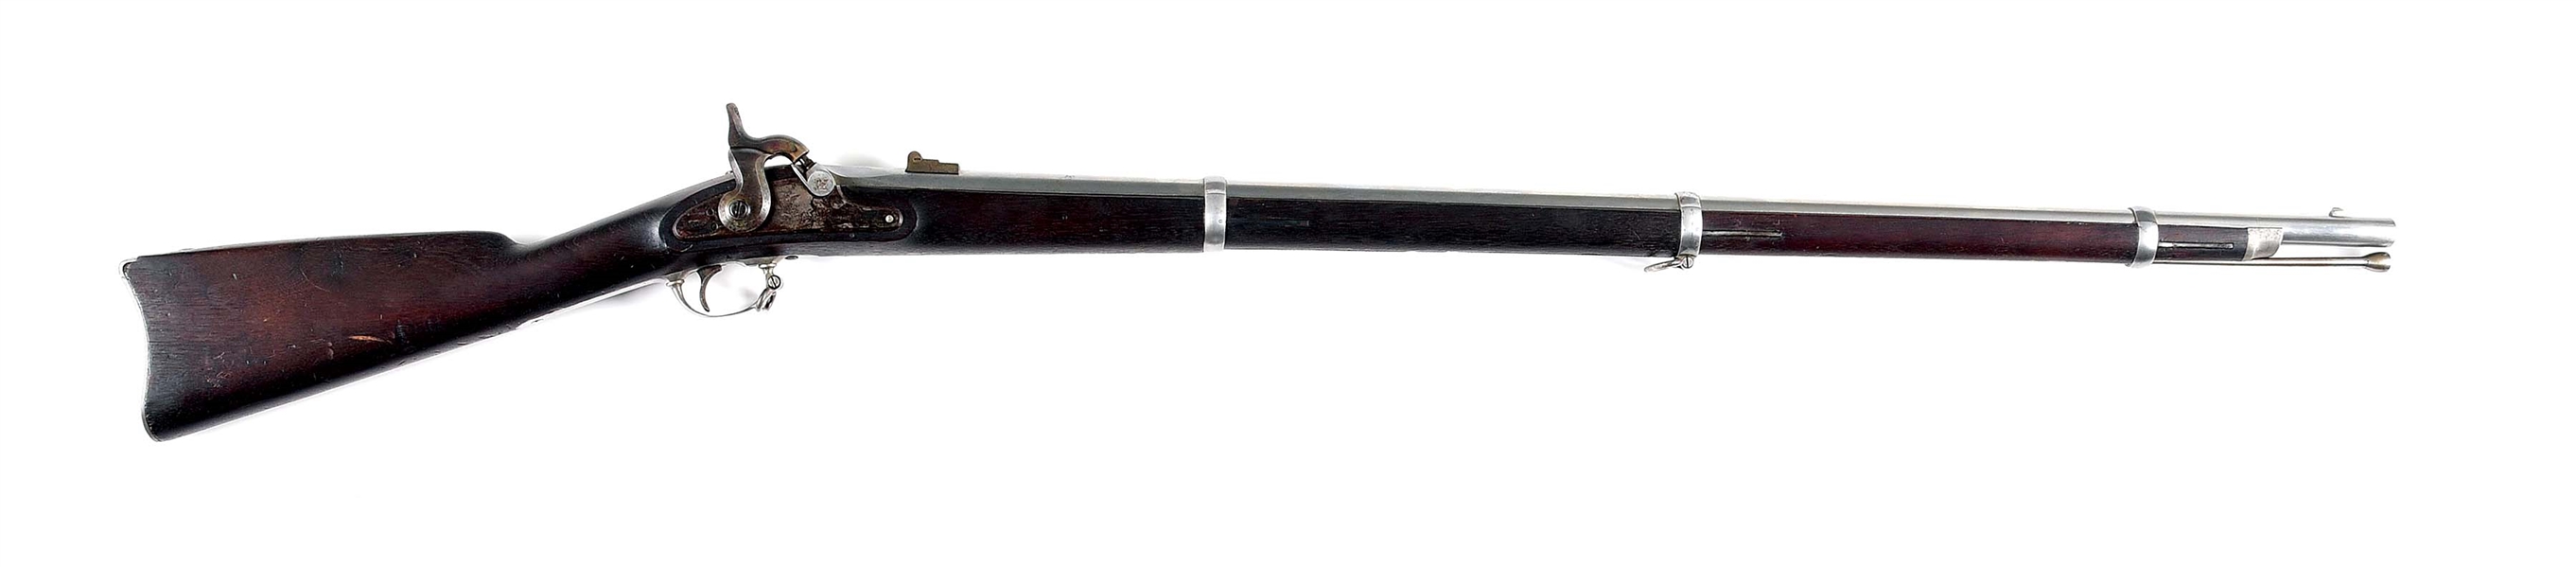 (A) SPRINGFIELD MODEL 1863 PERCUSSION RIFLE.